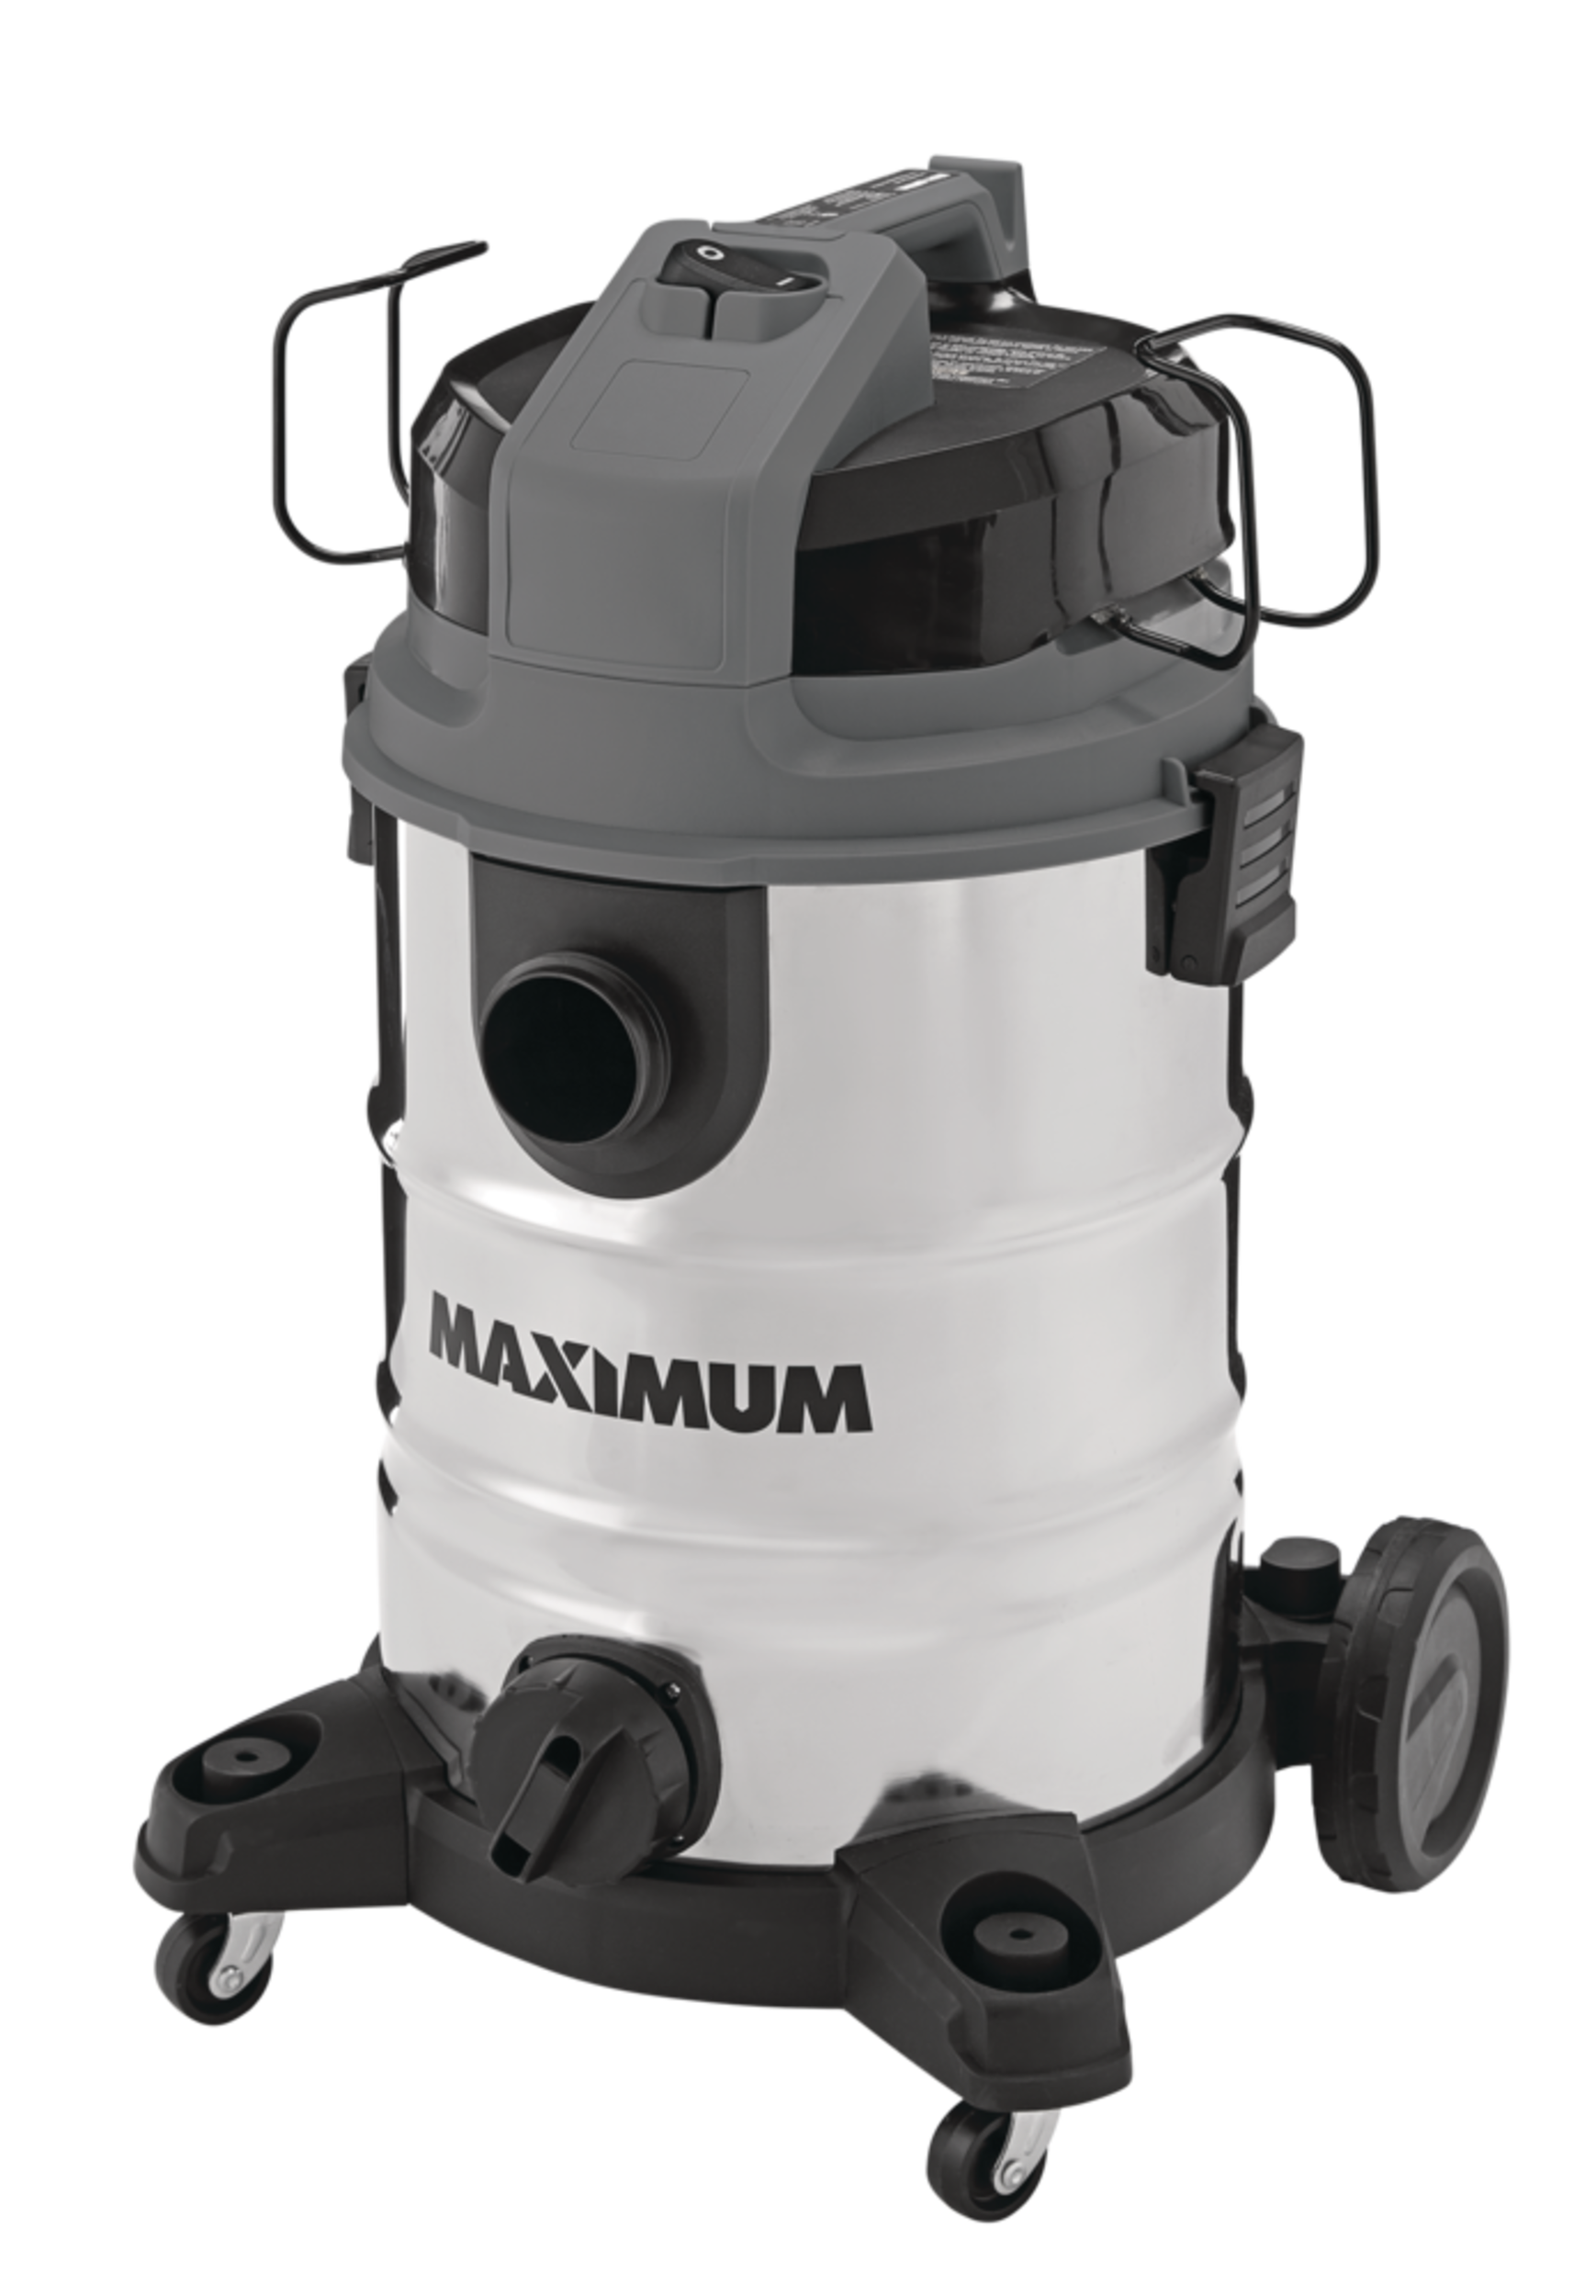 MAXIMUM VKD811SW 5.5 Peak HP Stainless Steel Wet/Dry Shop Vacuum with ...